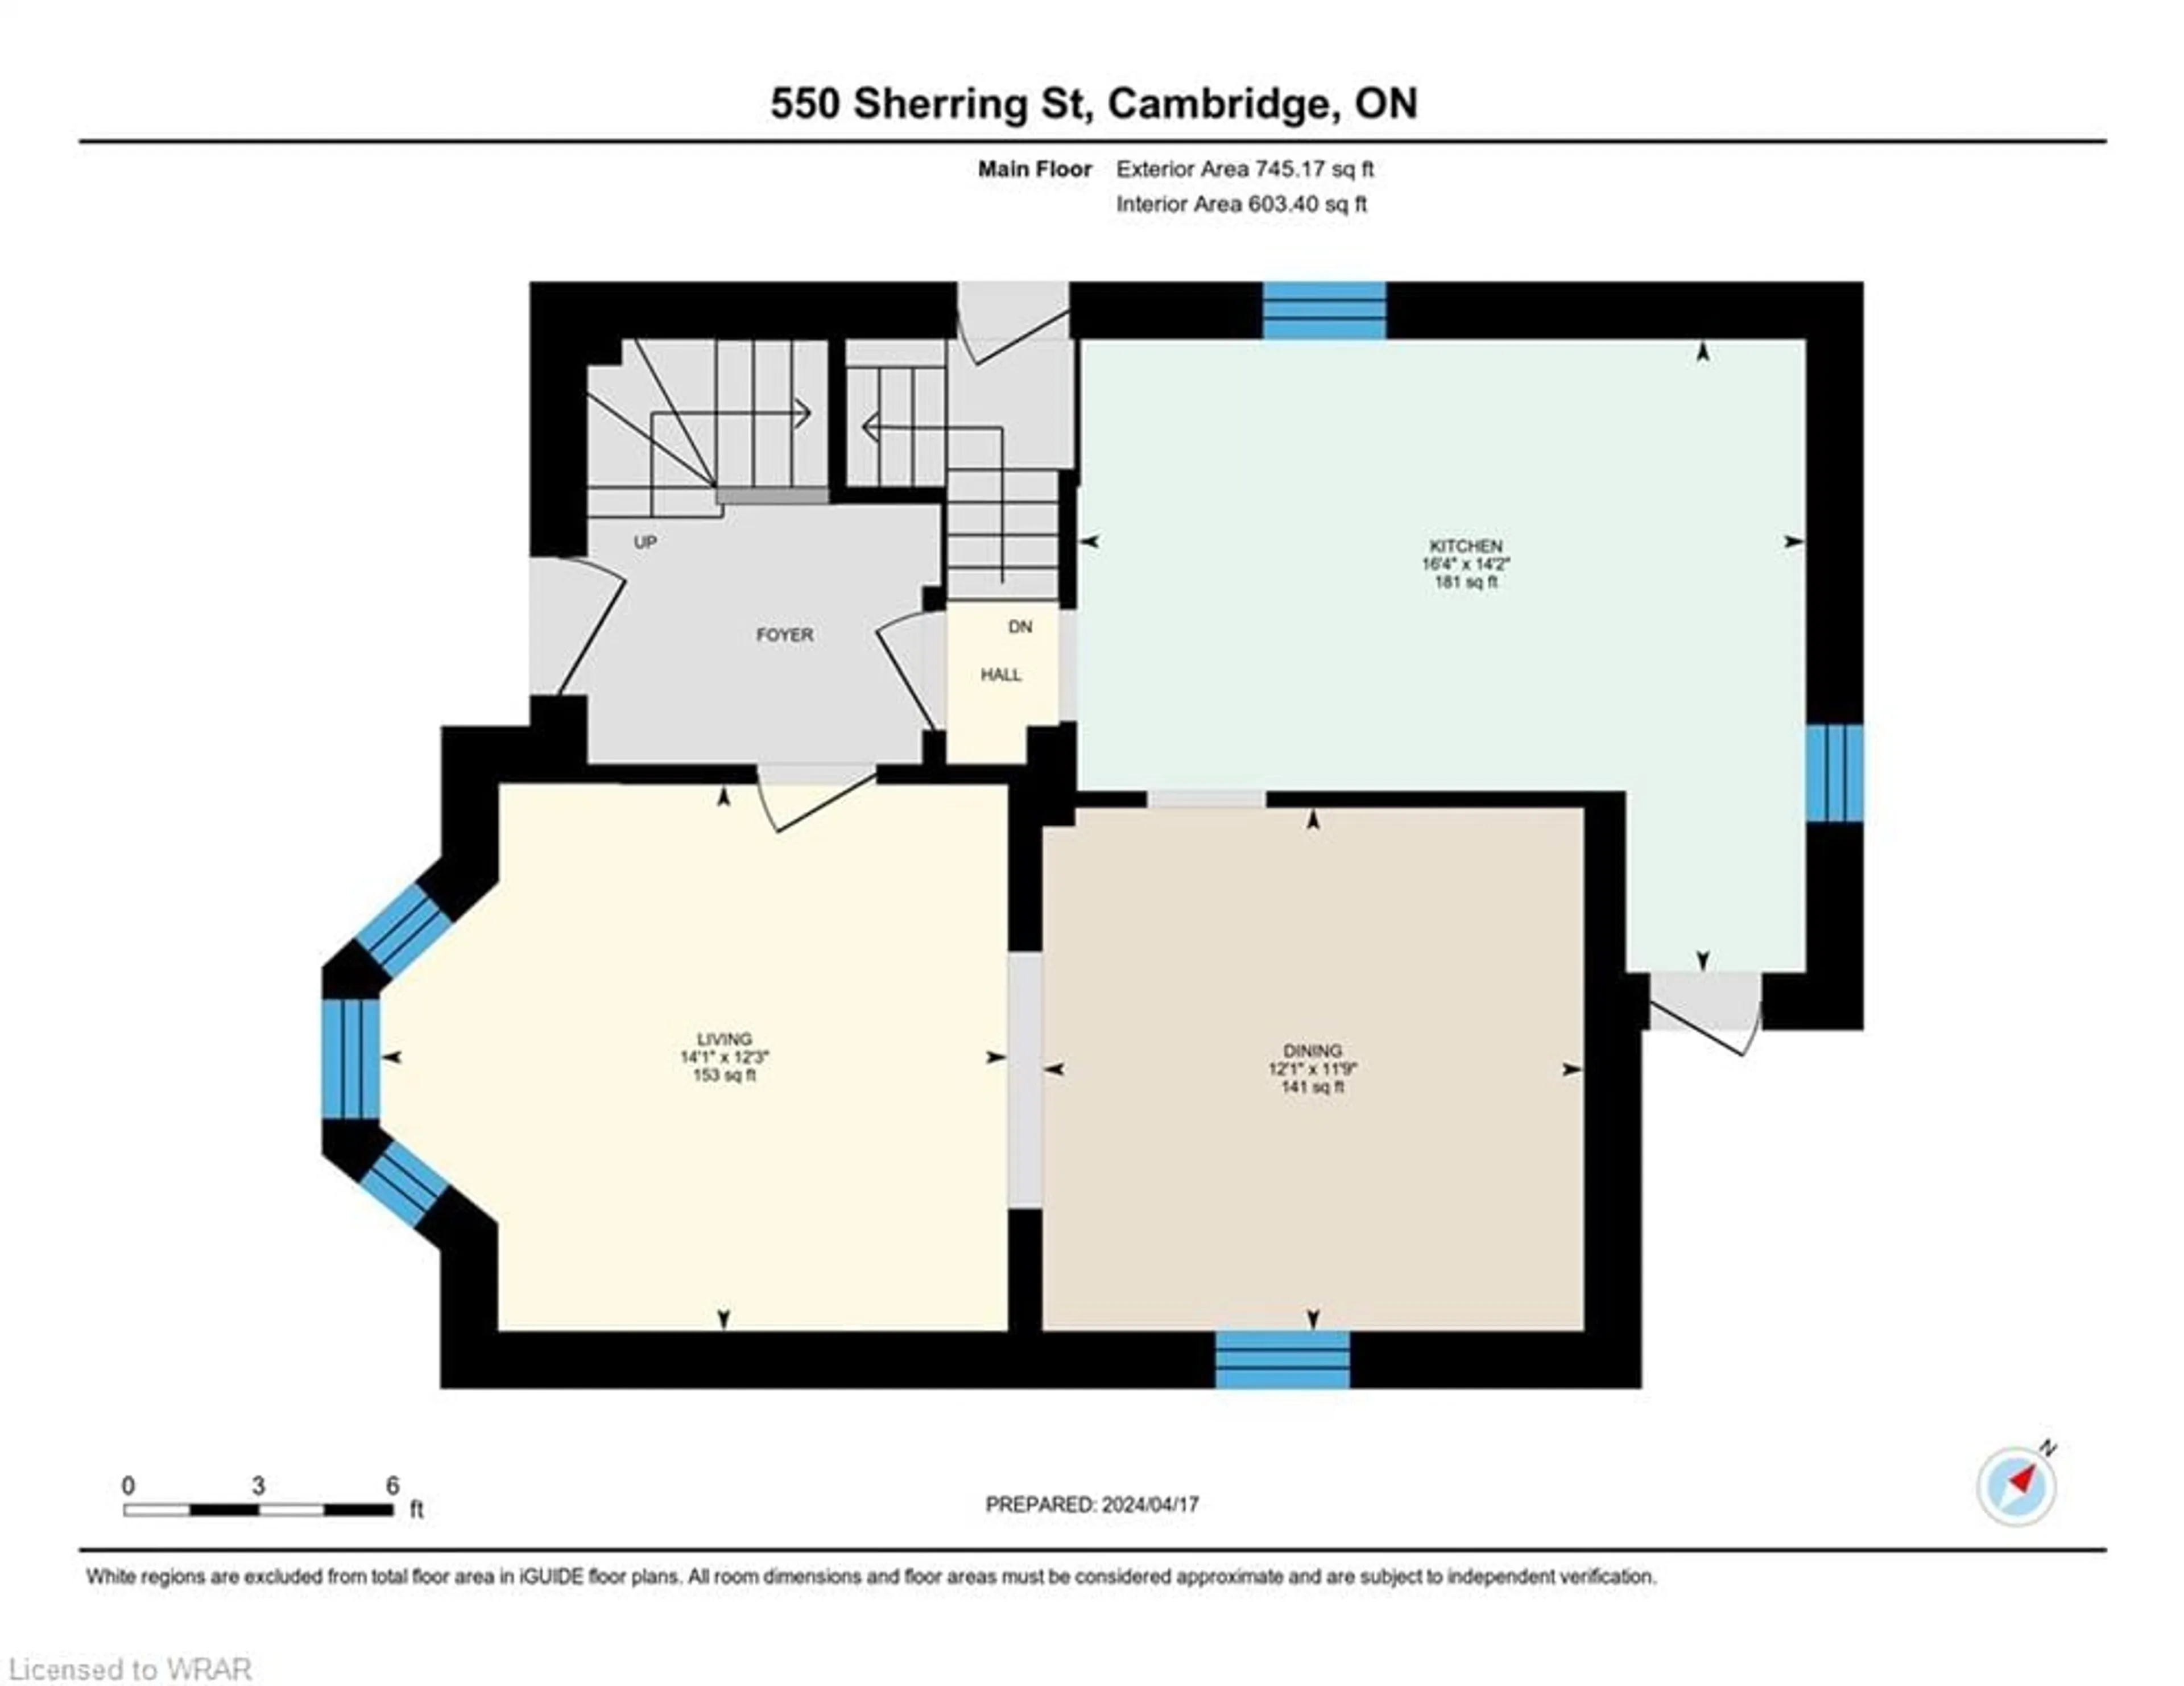 Floor plan for 550 Sherring St, Cambridge Ontario N3H 2W8